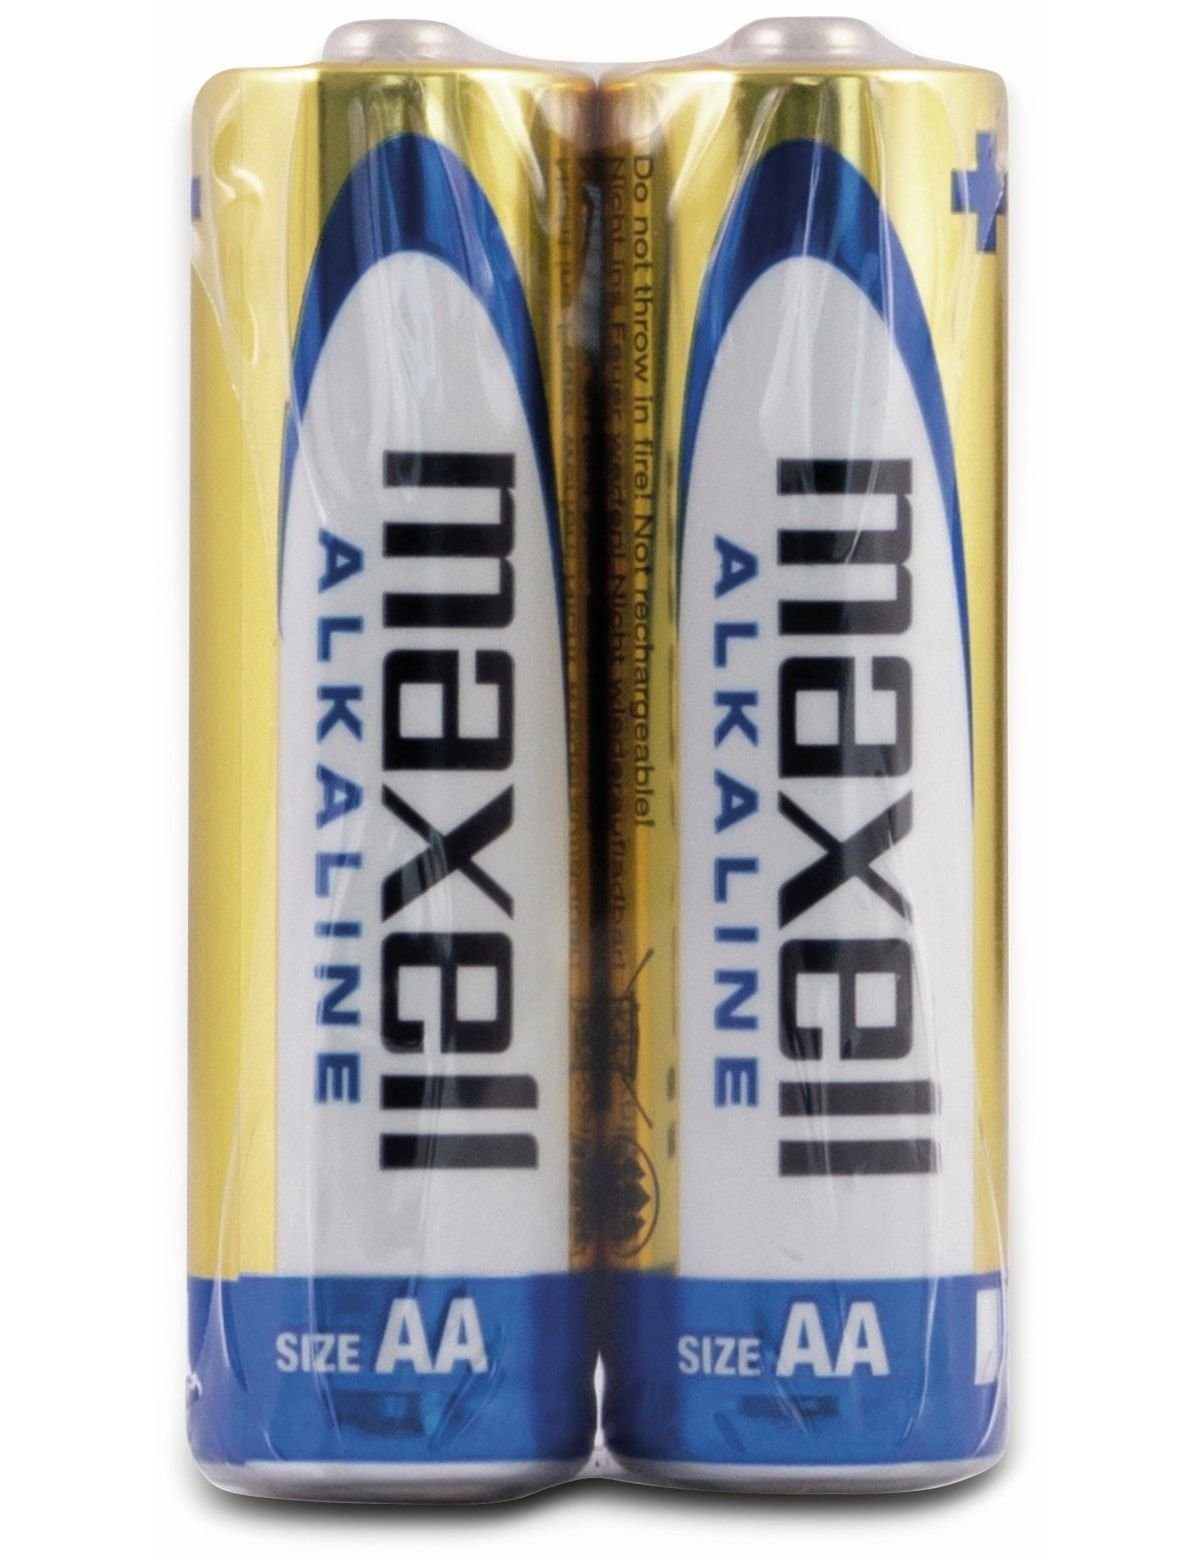 Maxell MAXELL Mignon-Batterie Alkaline, AA, 2 Stück Batterie LR6